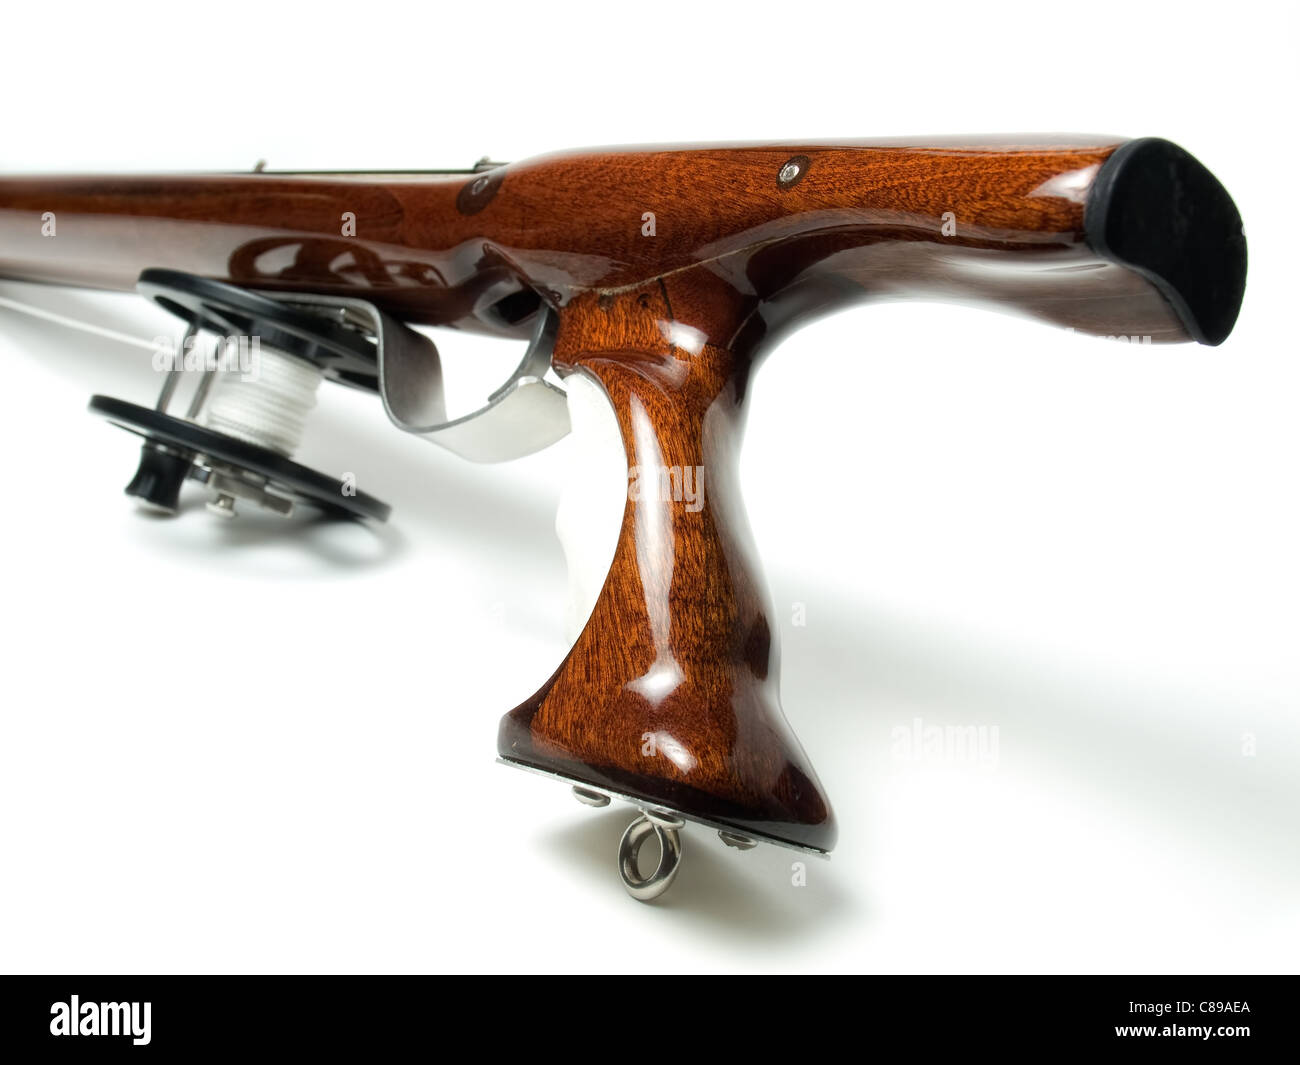 https://c8.alamy.com/comp/C89AEA/rear-view-of-reel-and-handle-of-wooden-spear-gun-C89AEA.jpg